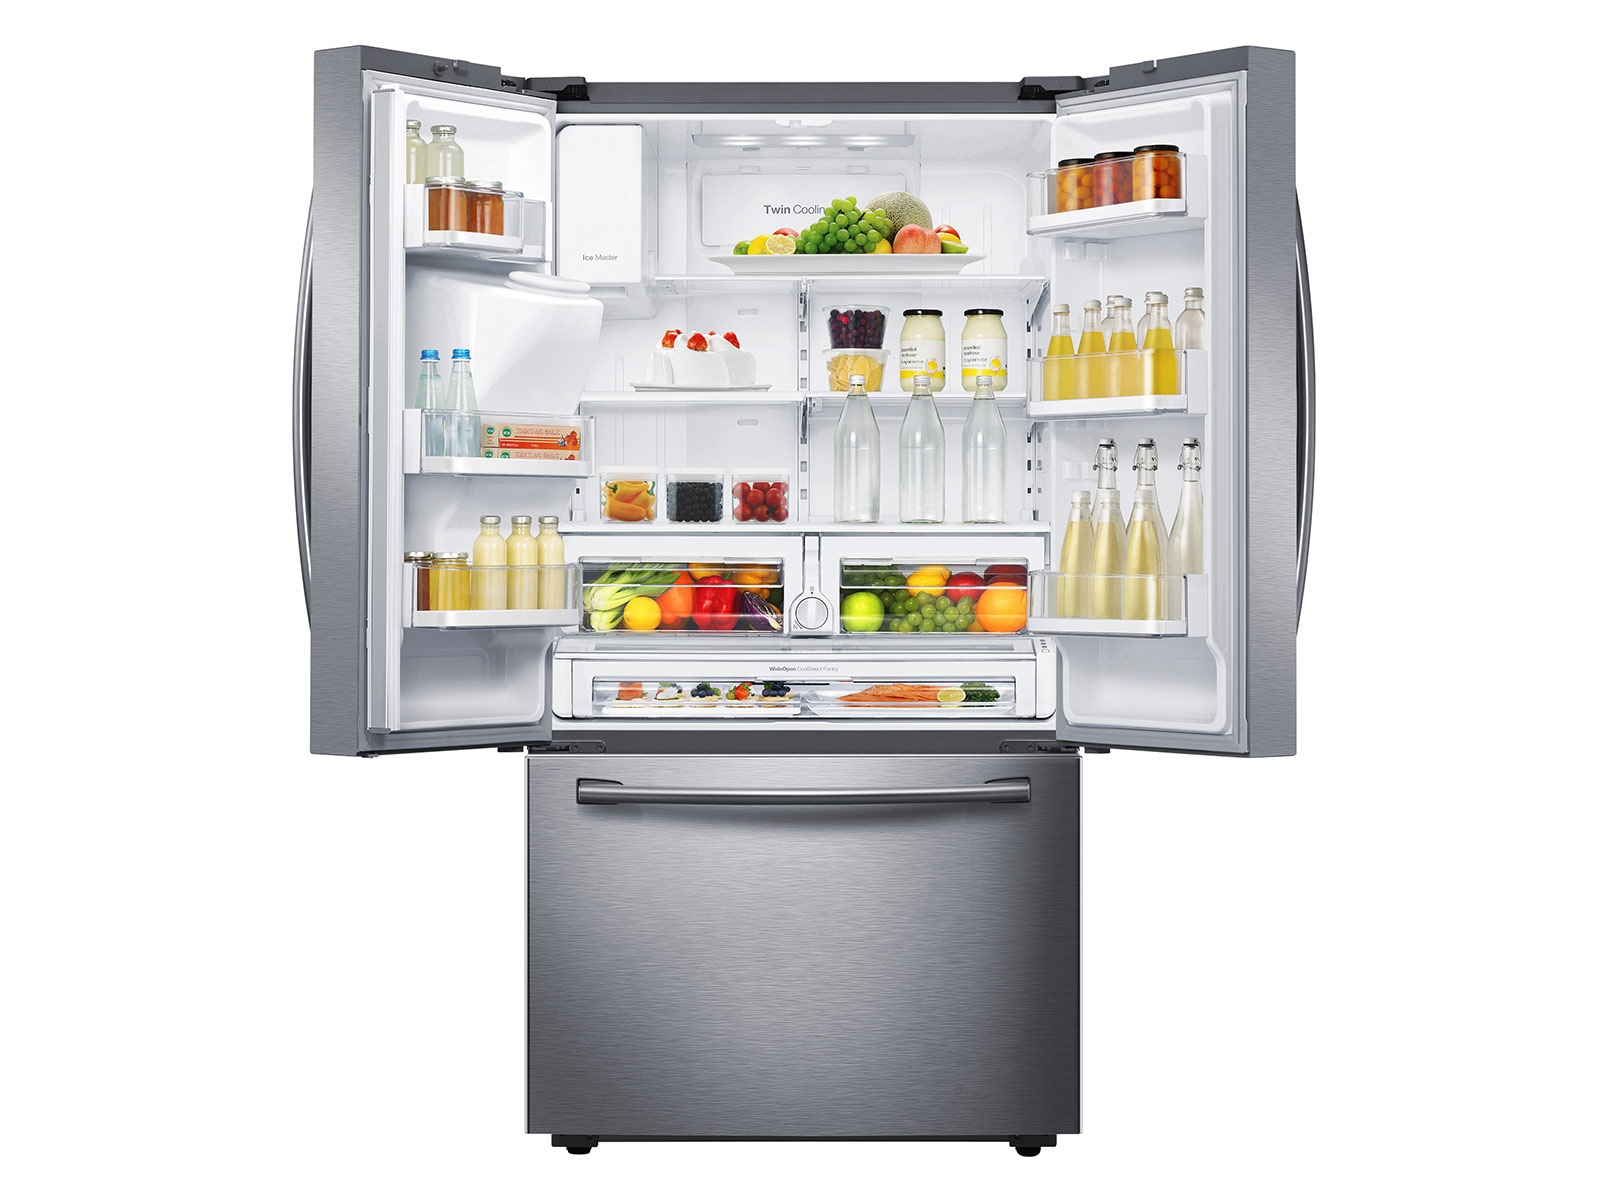 Samsung RF28HFEDBSR/AA Refrigerator Parts– Samsung Parts USA